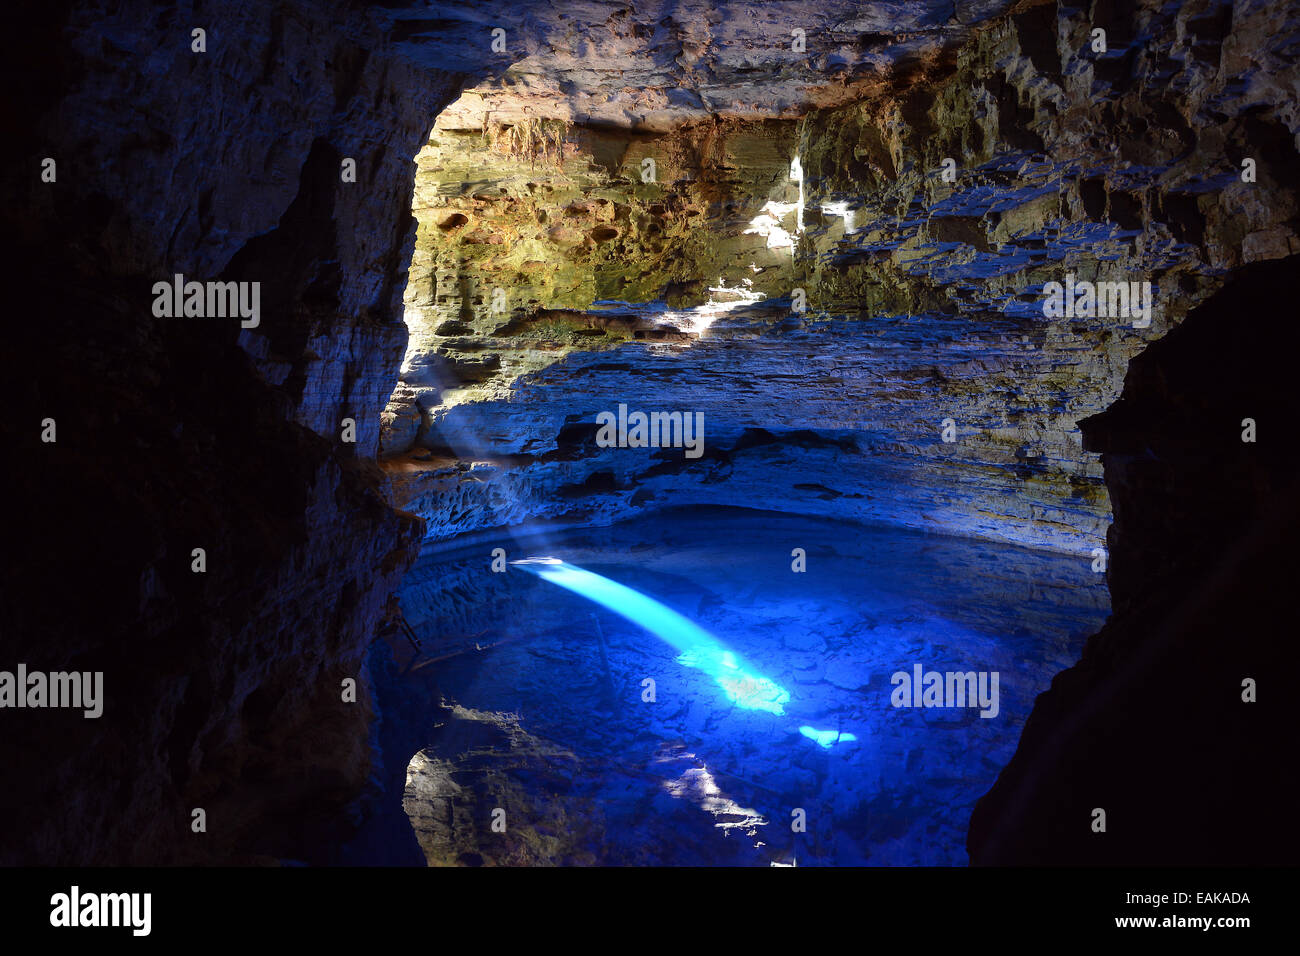 Die bunten Höhle Poco Encantado mit Strahlen von Licht, Chapada Diamantina Berge, Bahia, Brasilien Stockfoto